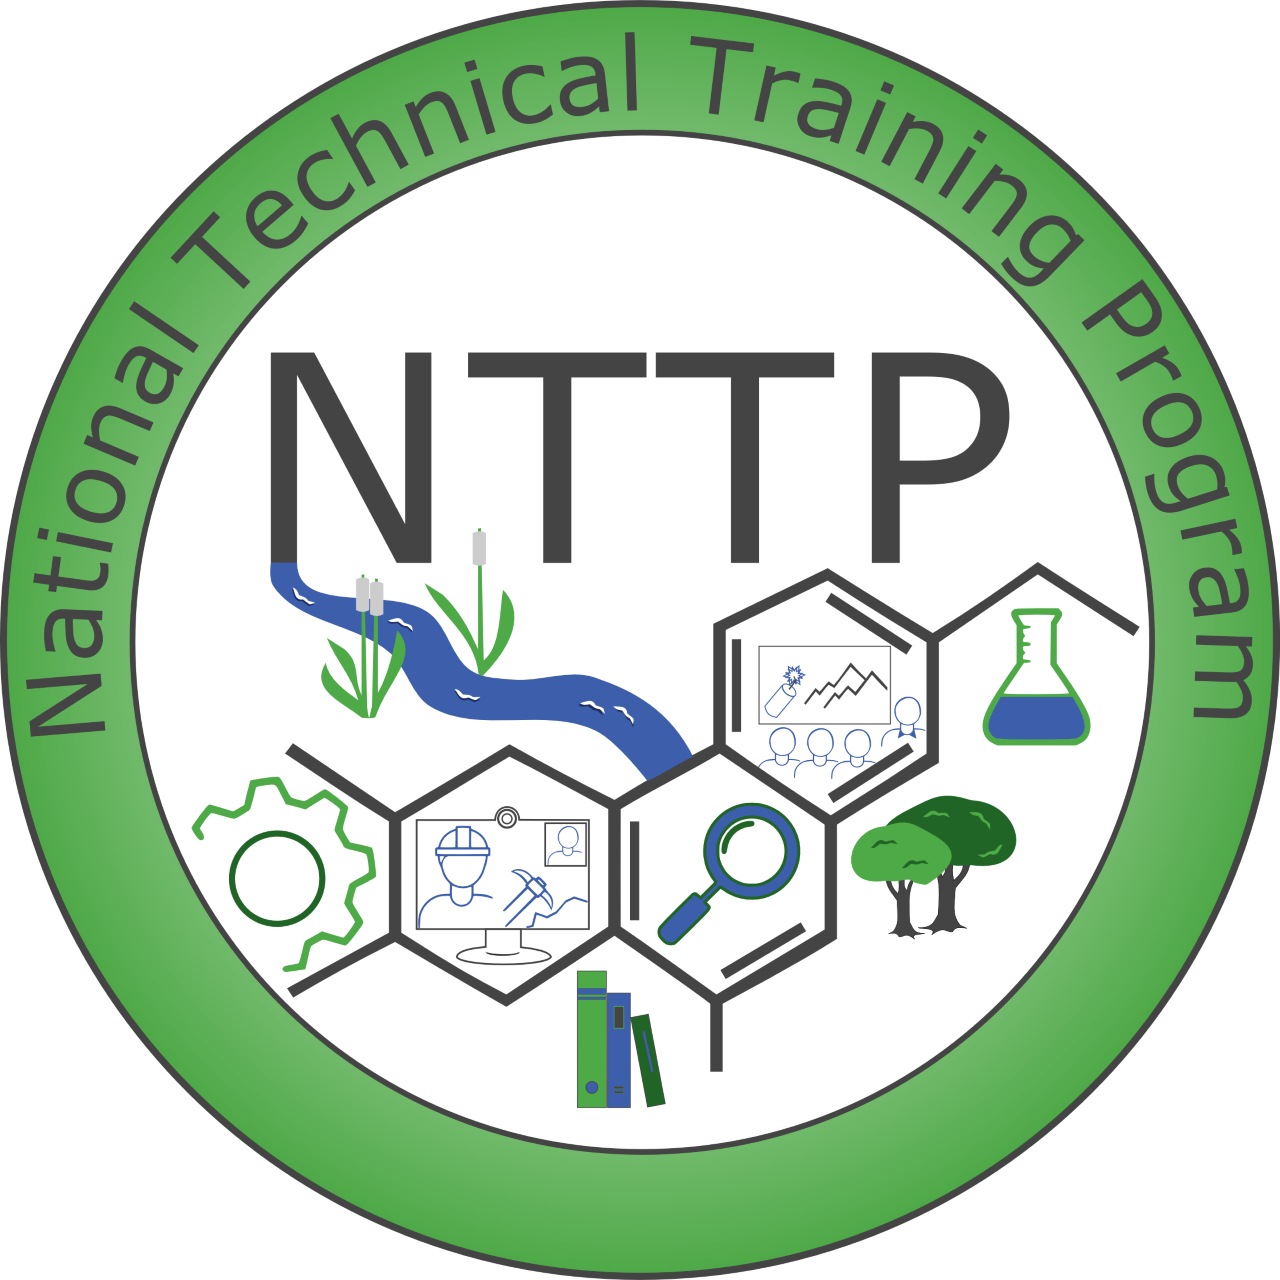 image of the NTTP logo